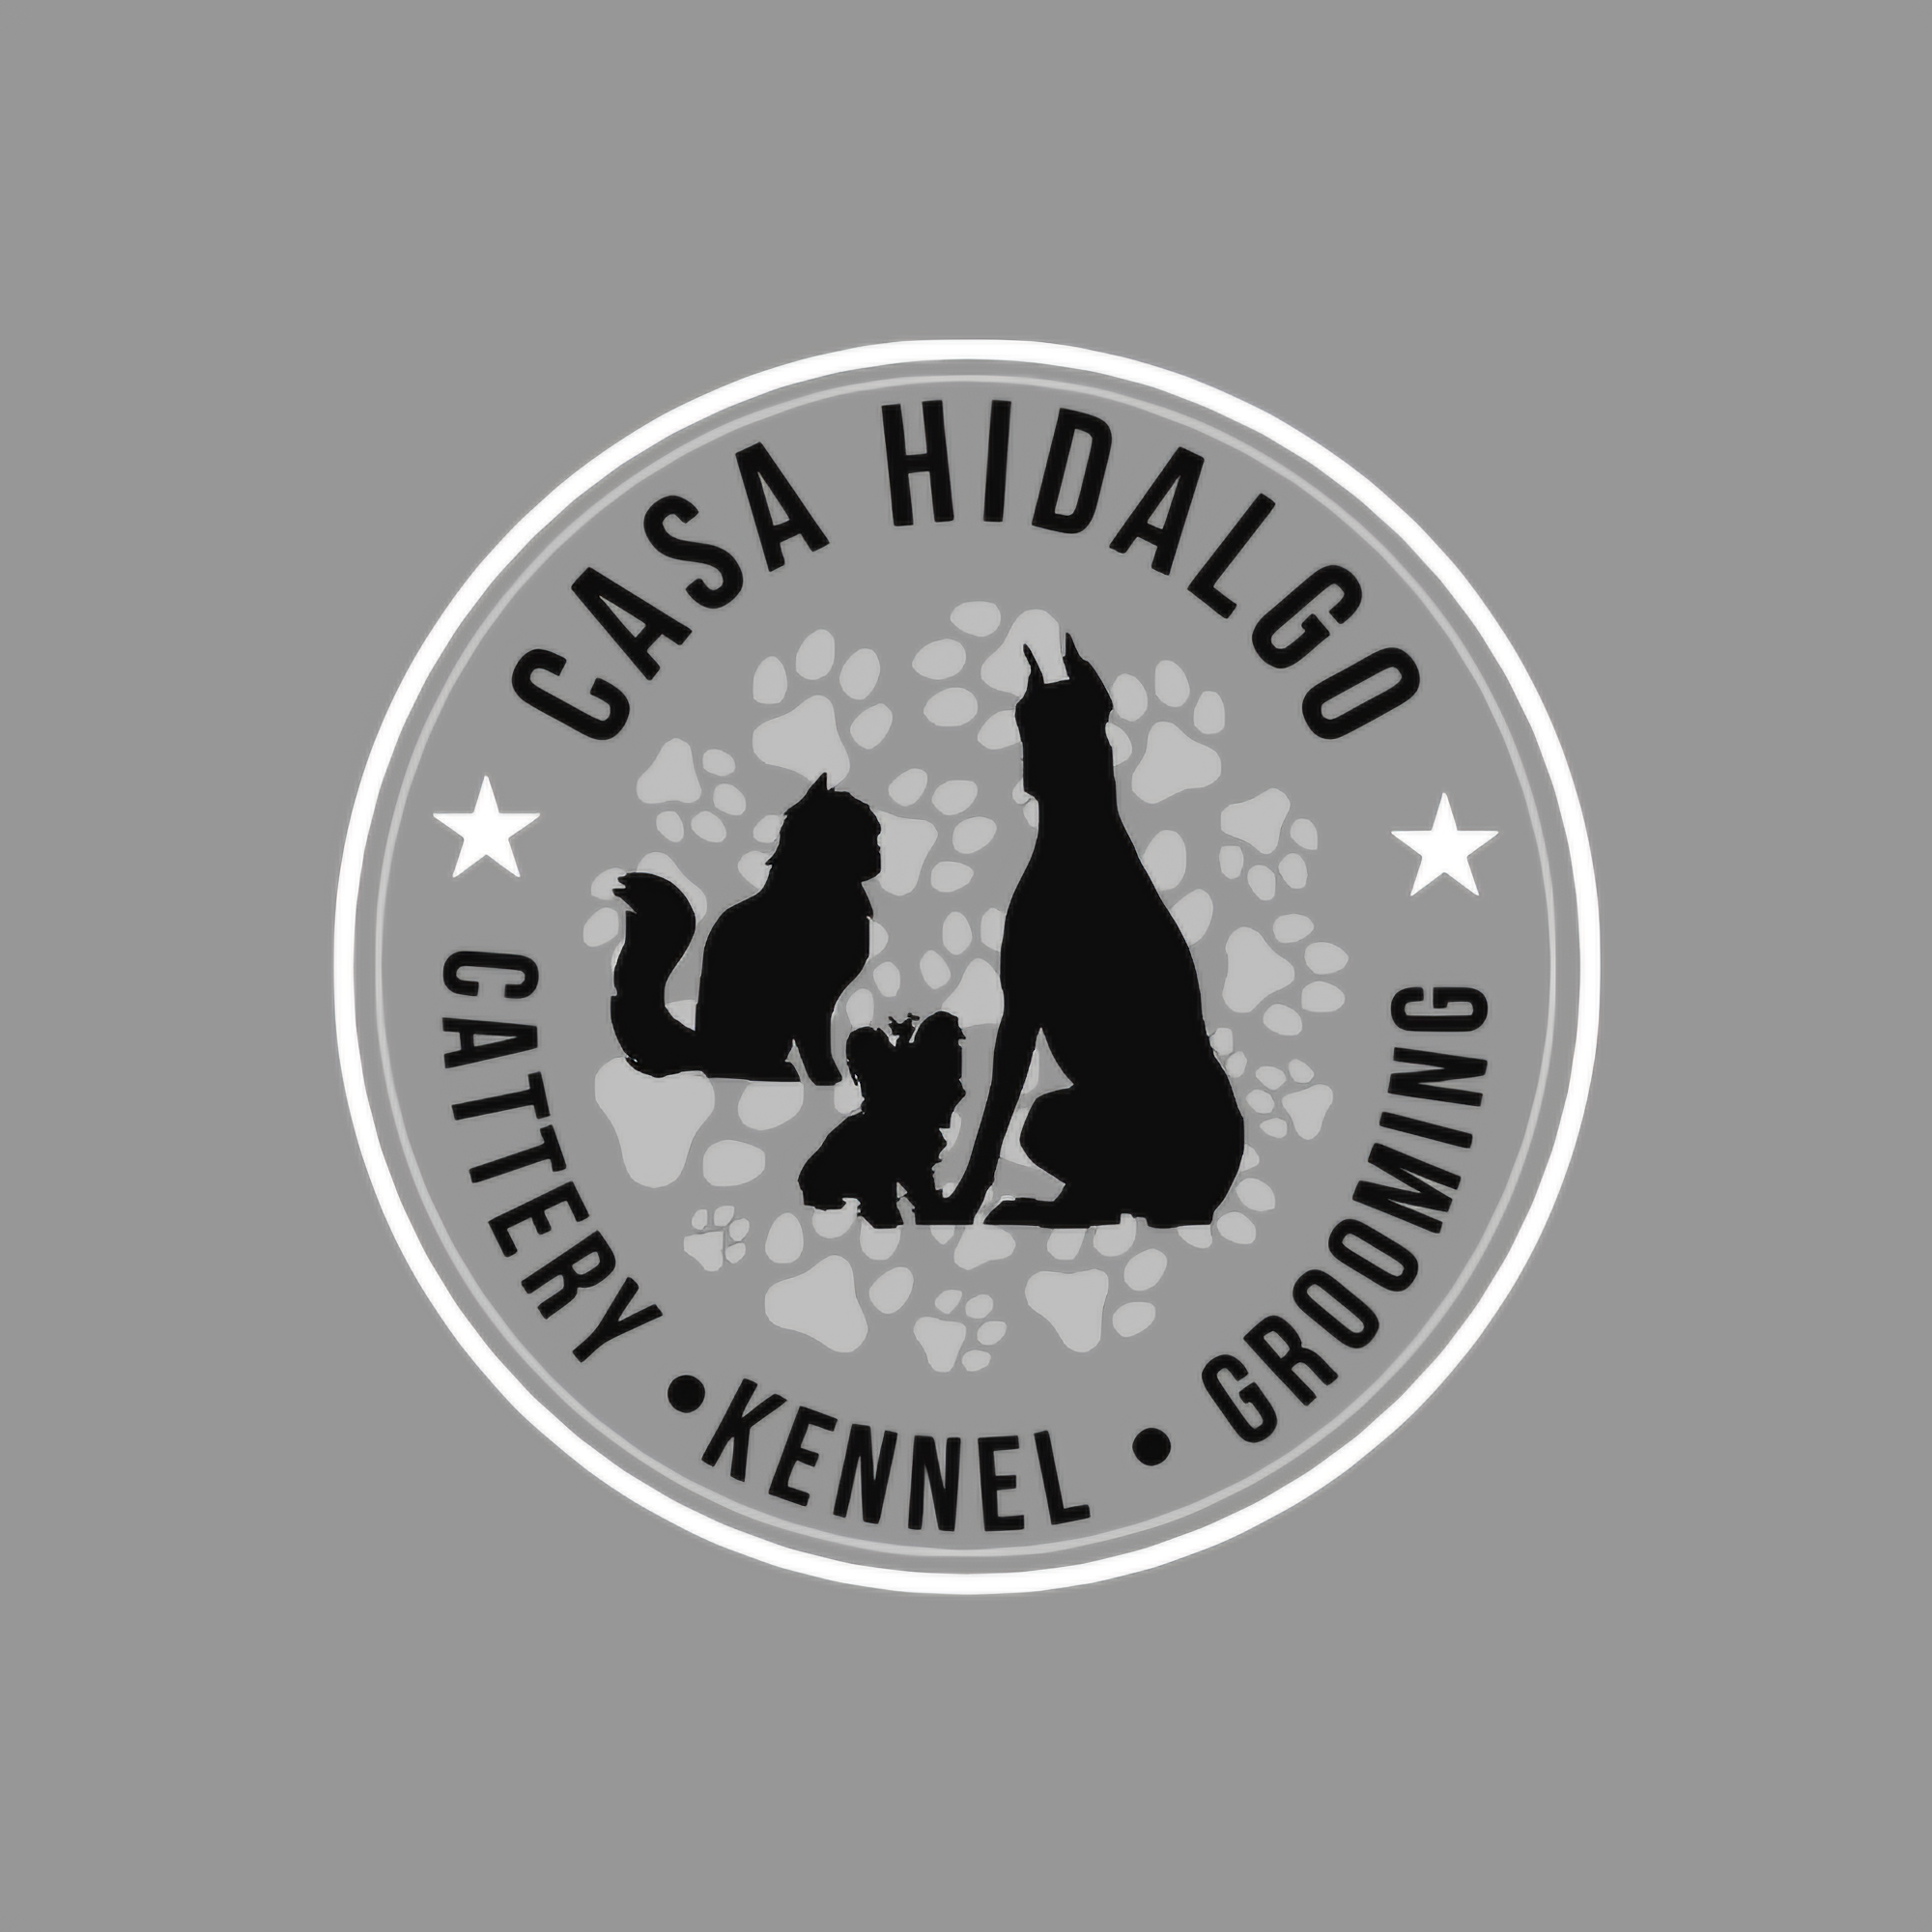 CASAHIDALGOCATTERY logo